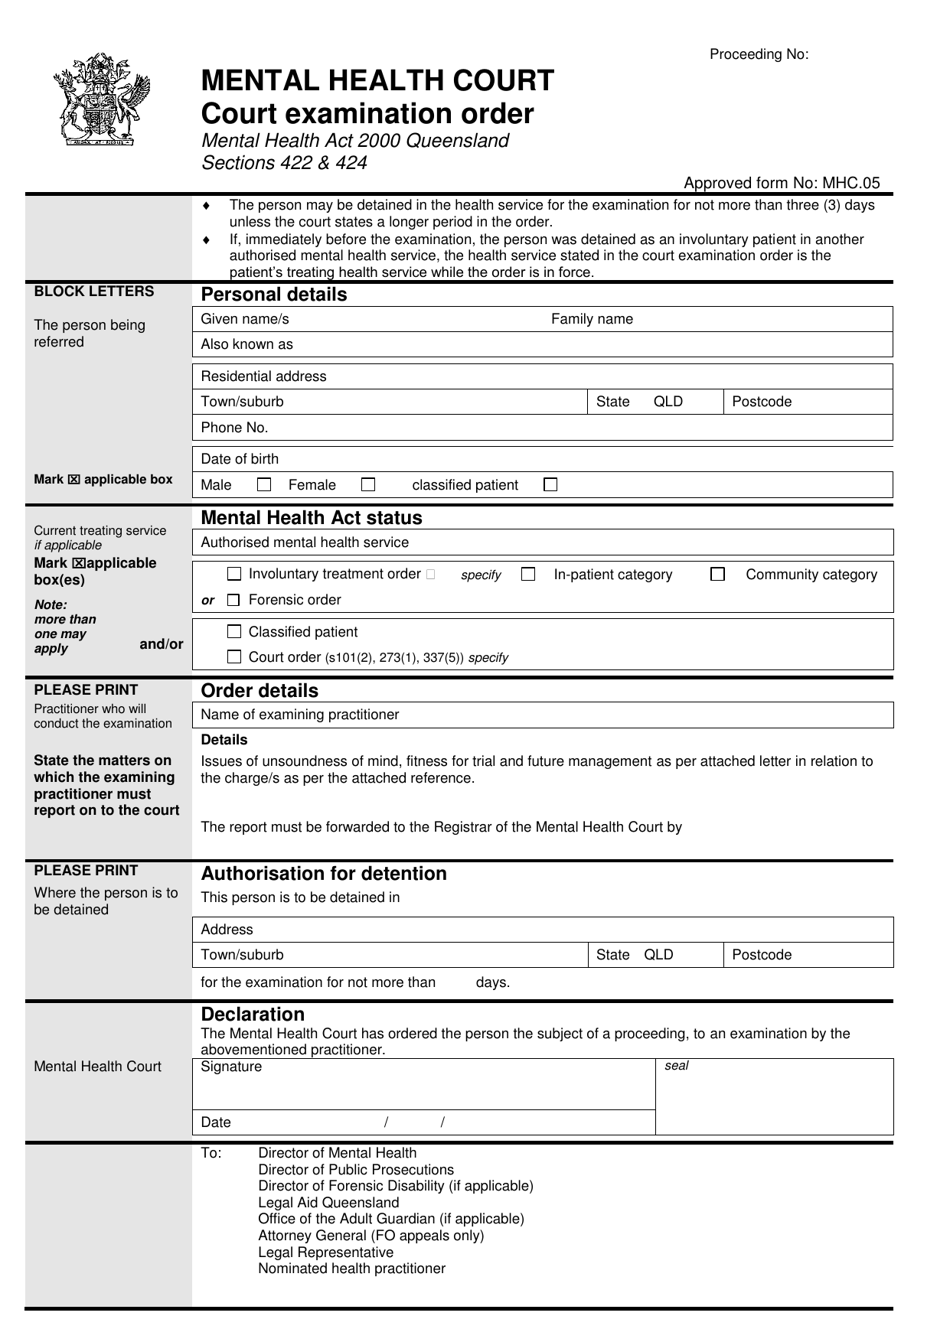 Form MHC.05 Court Examination Order - Queensland, Australia, Page 1